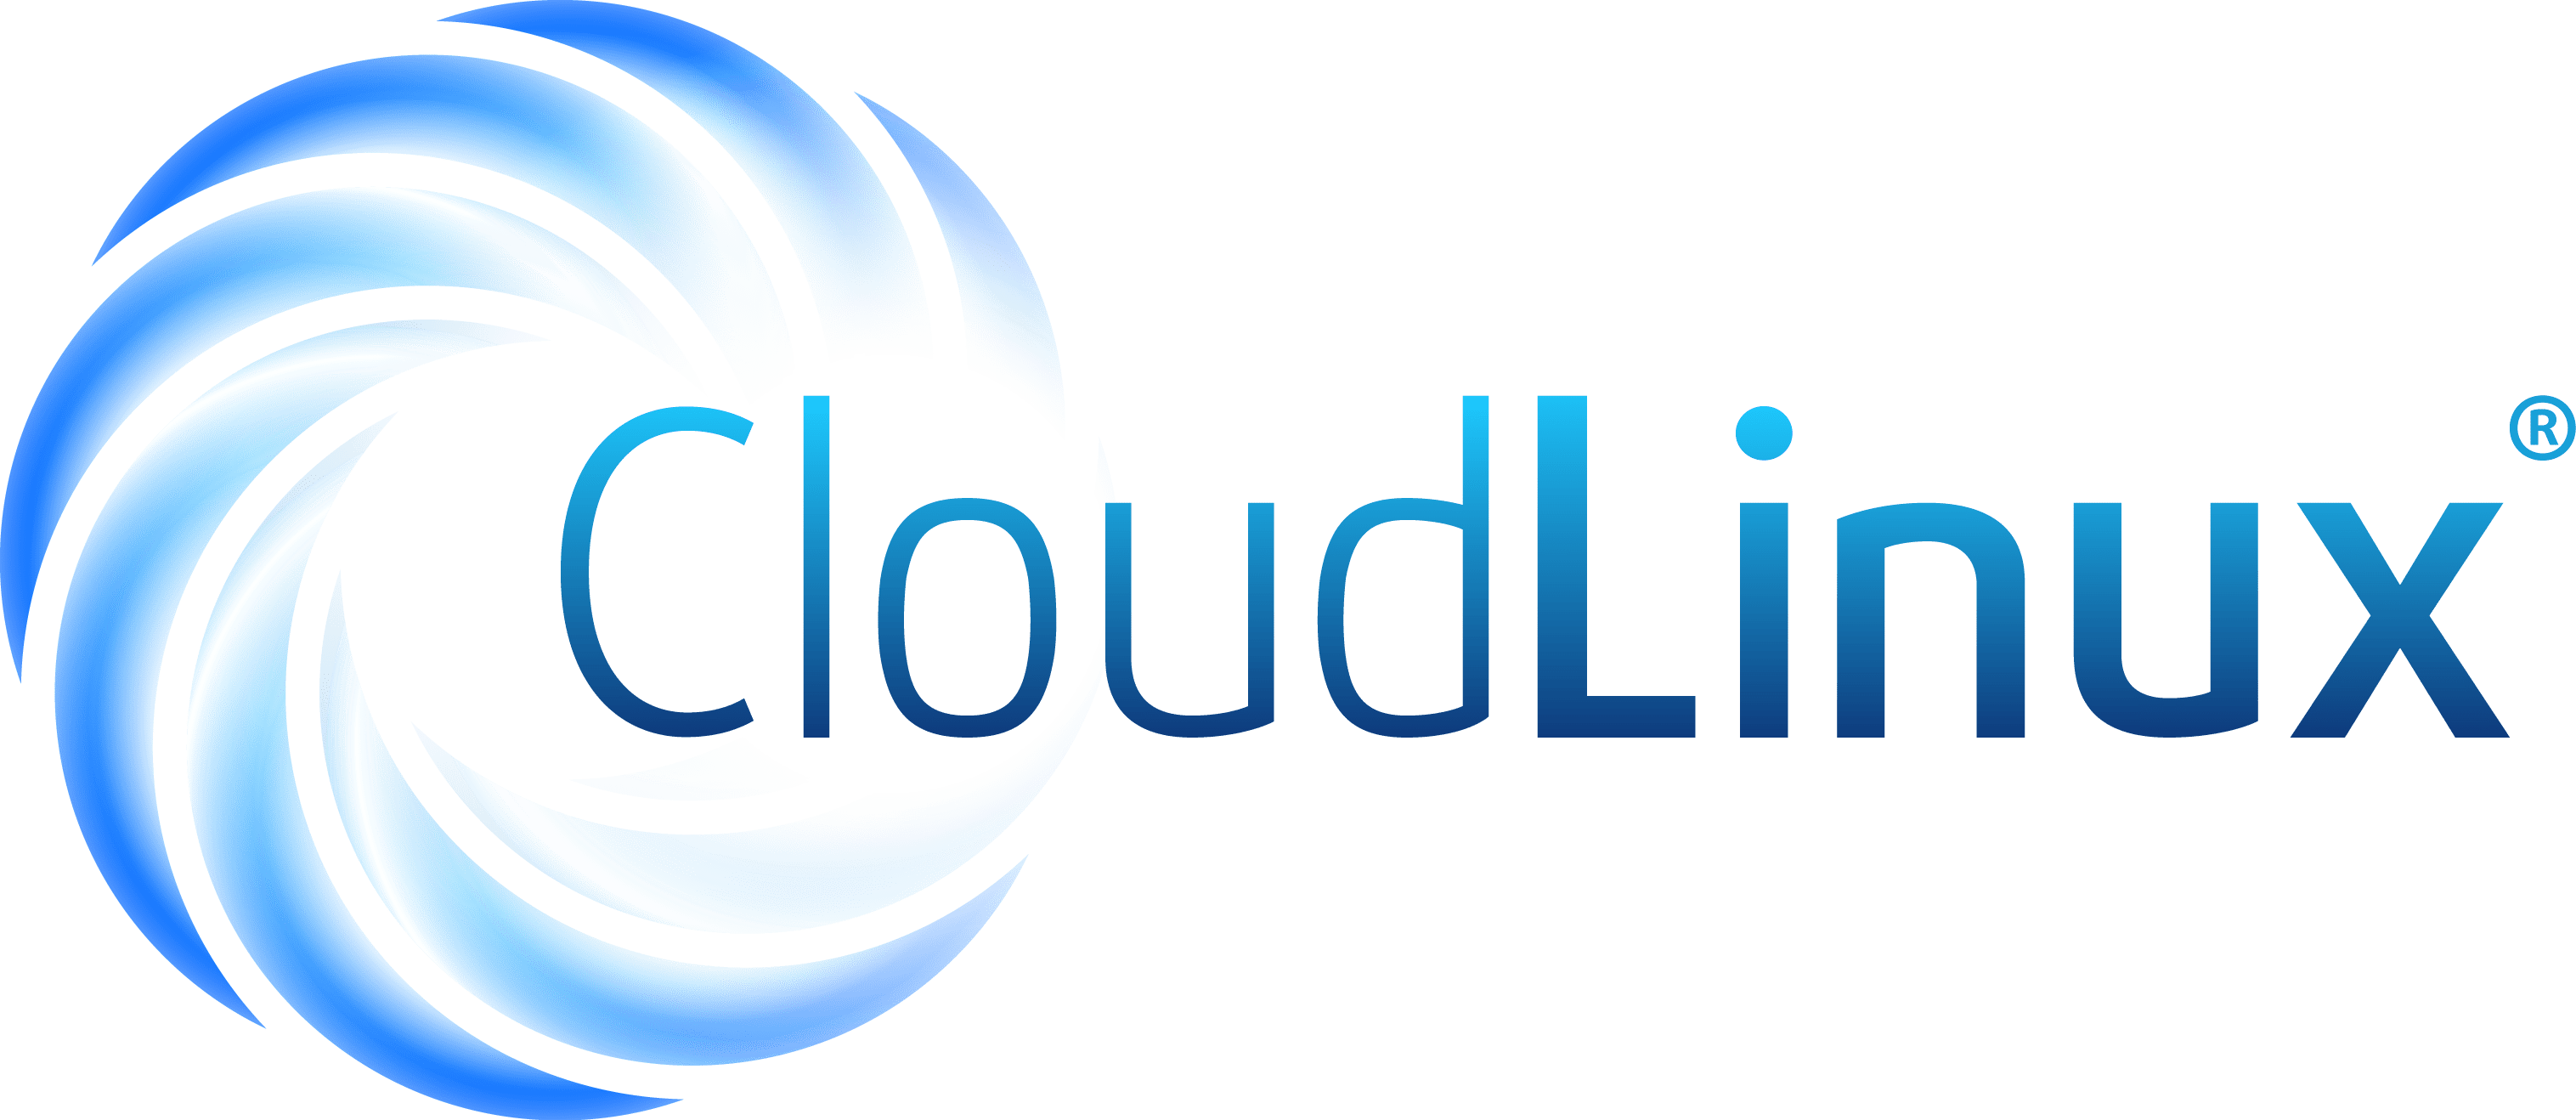 Cheap CloudLinux License